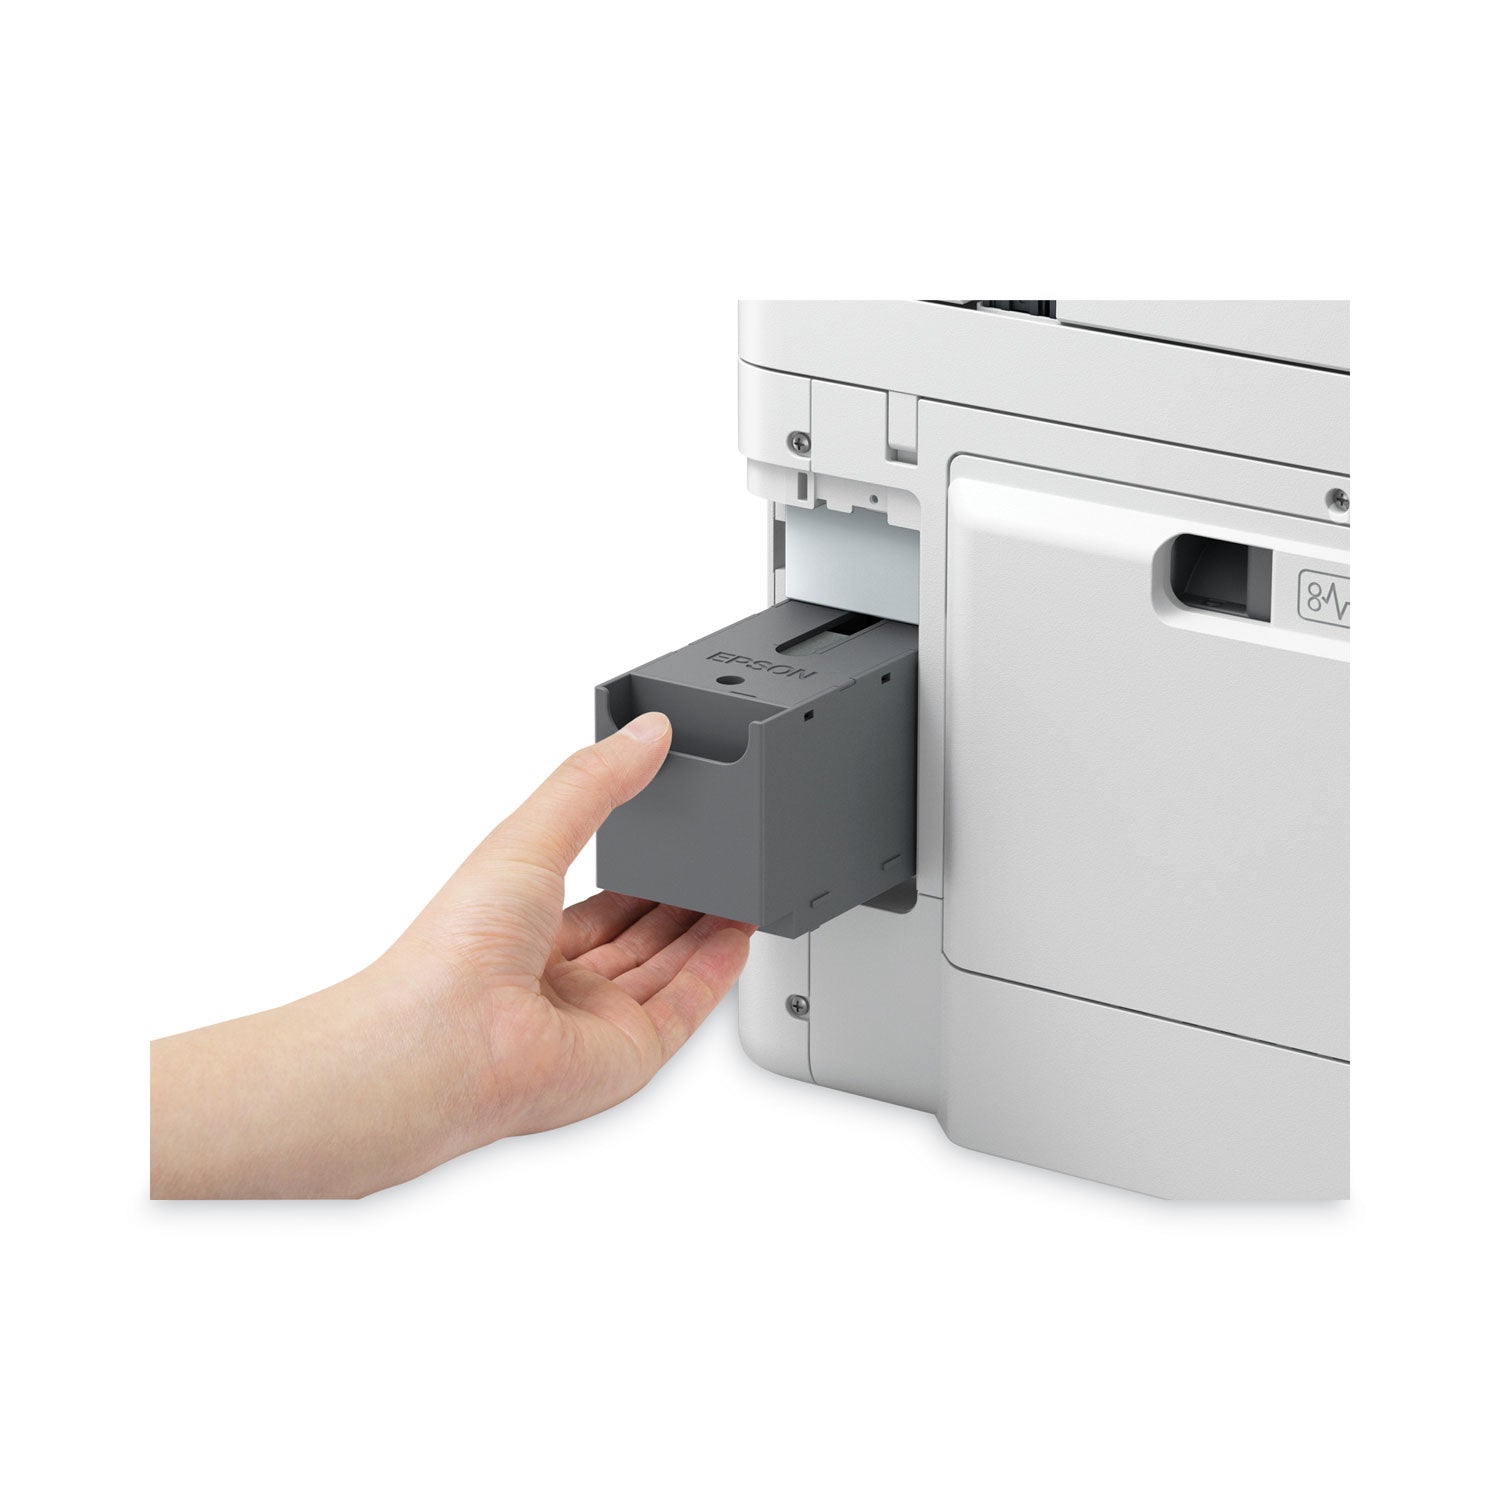 workforce-pro-wf-c4810-color-multifunction-printer-copy-fax-print-scan_epsc11cj05205 - 6